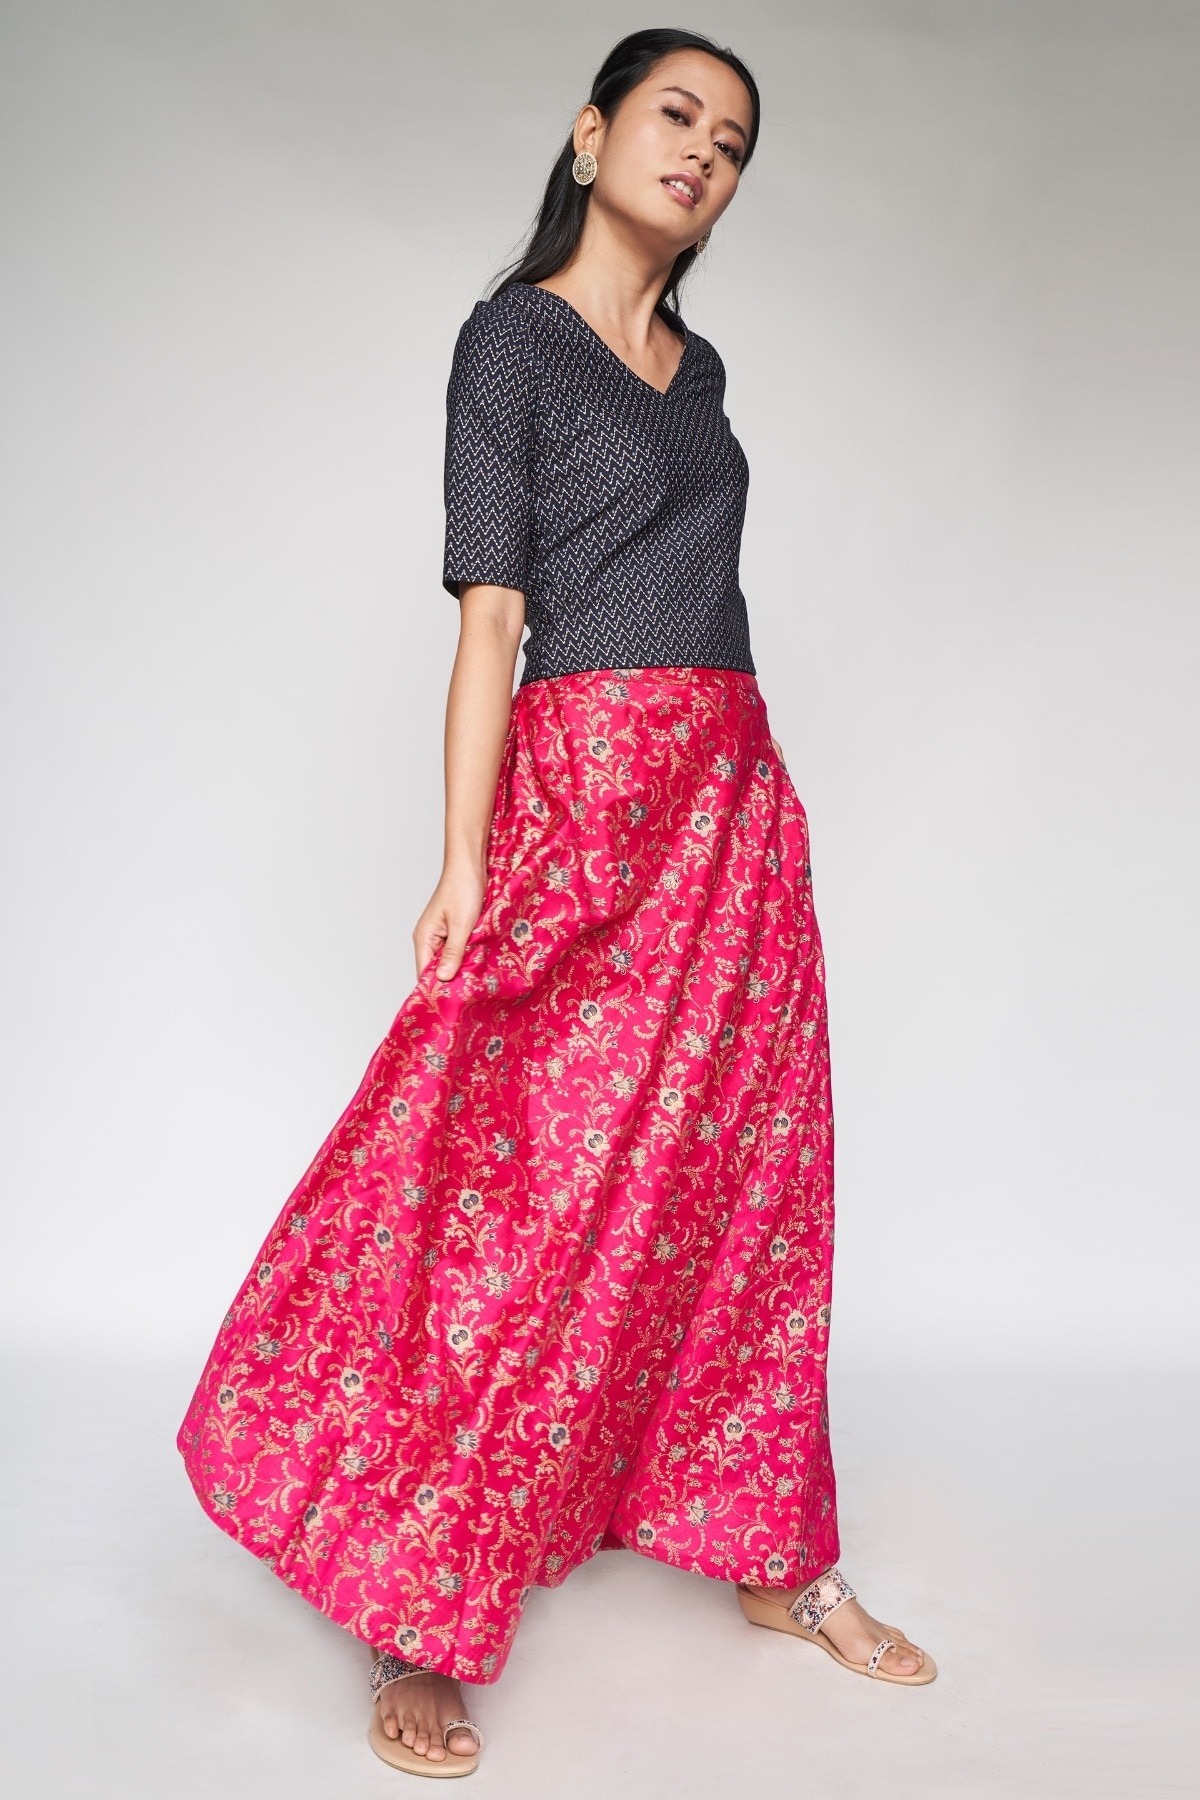 Global Desi | Hot Pink Ethnic Motifs Flared Skirt